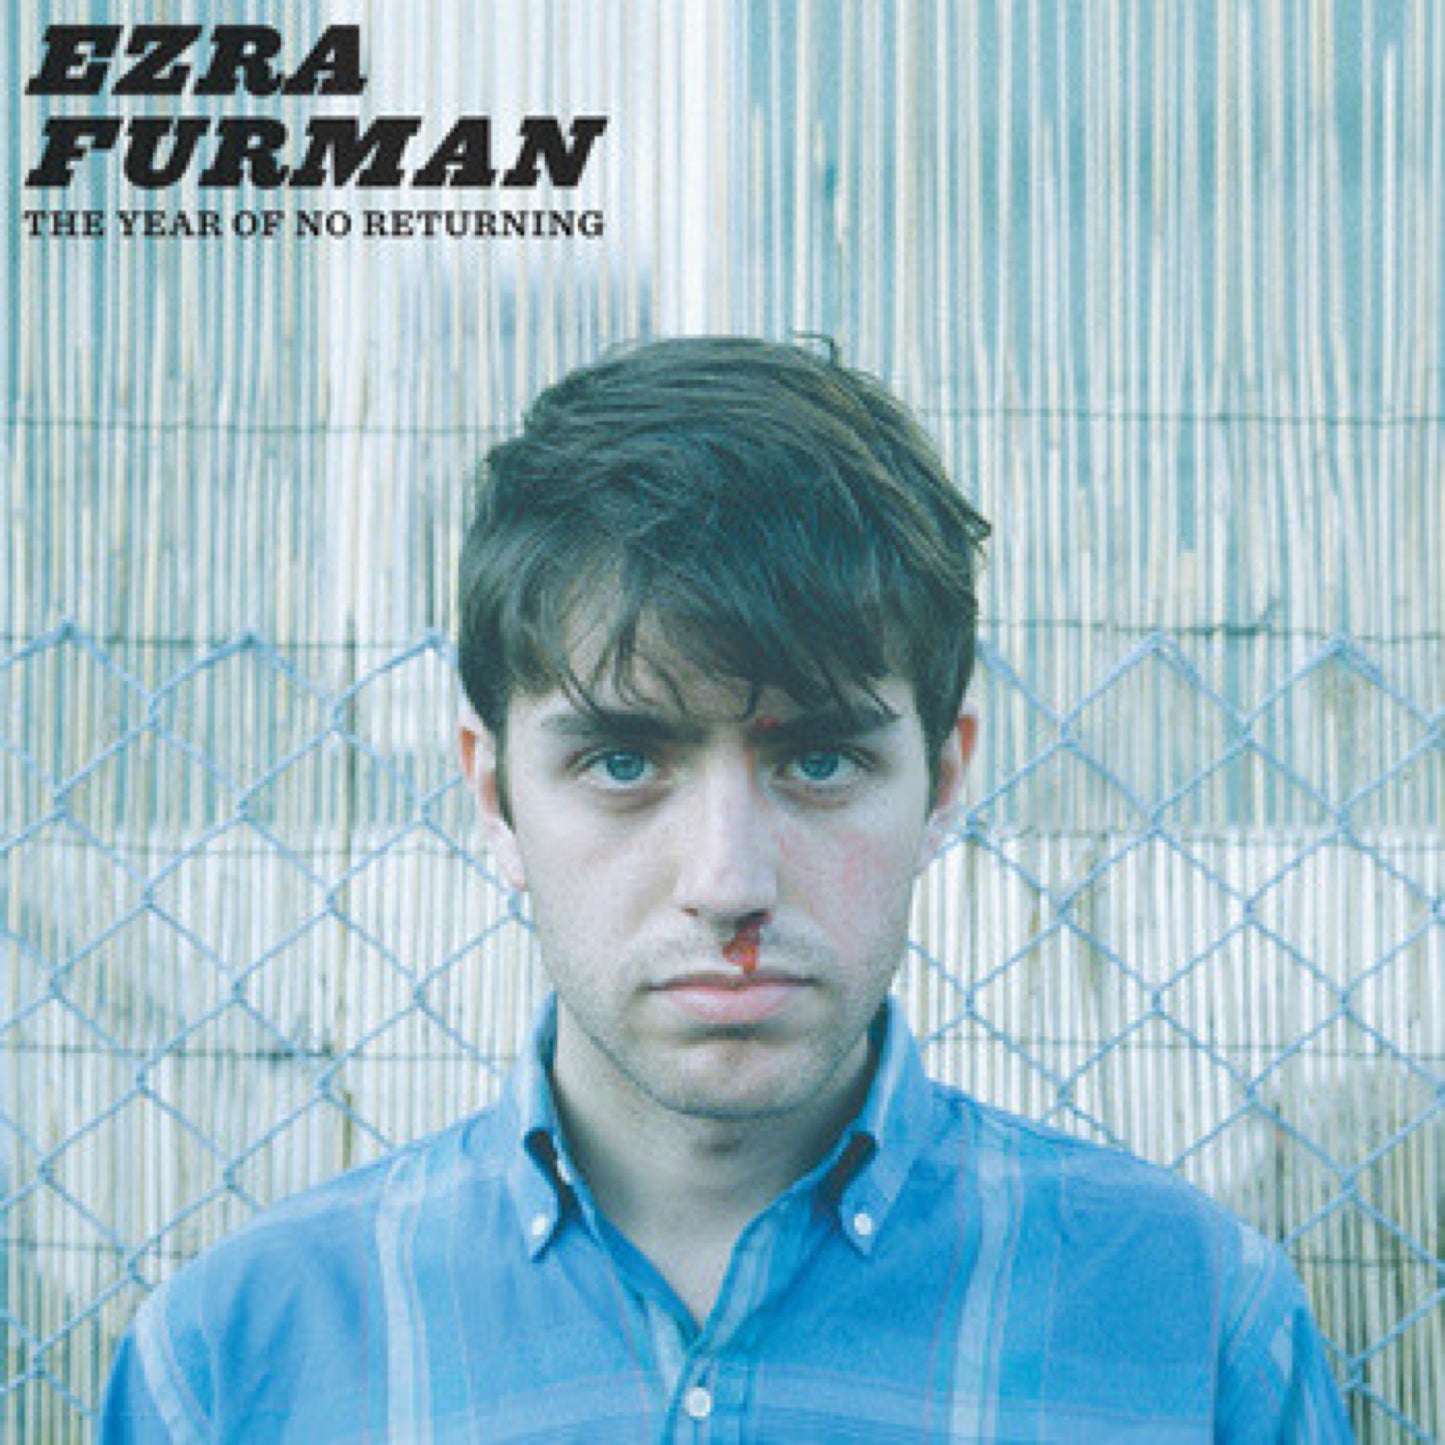 Furman, Ezra - The Year of No Returning